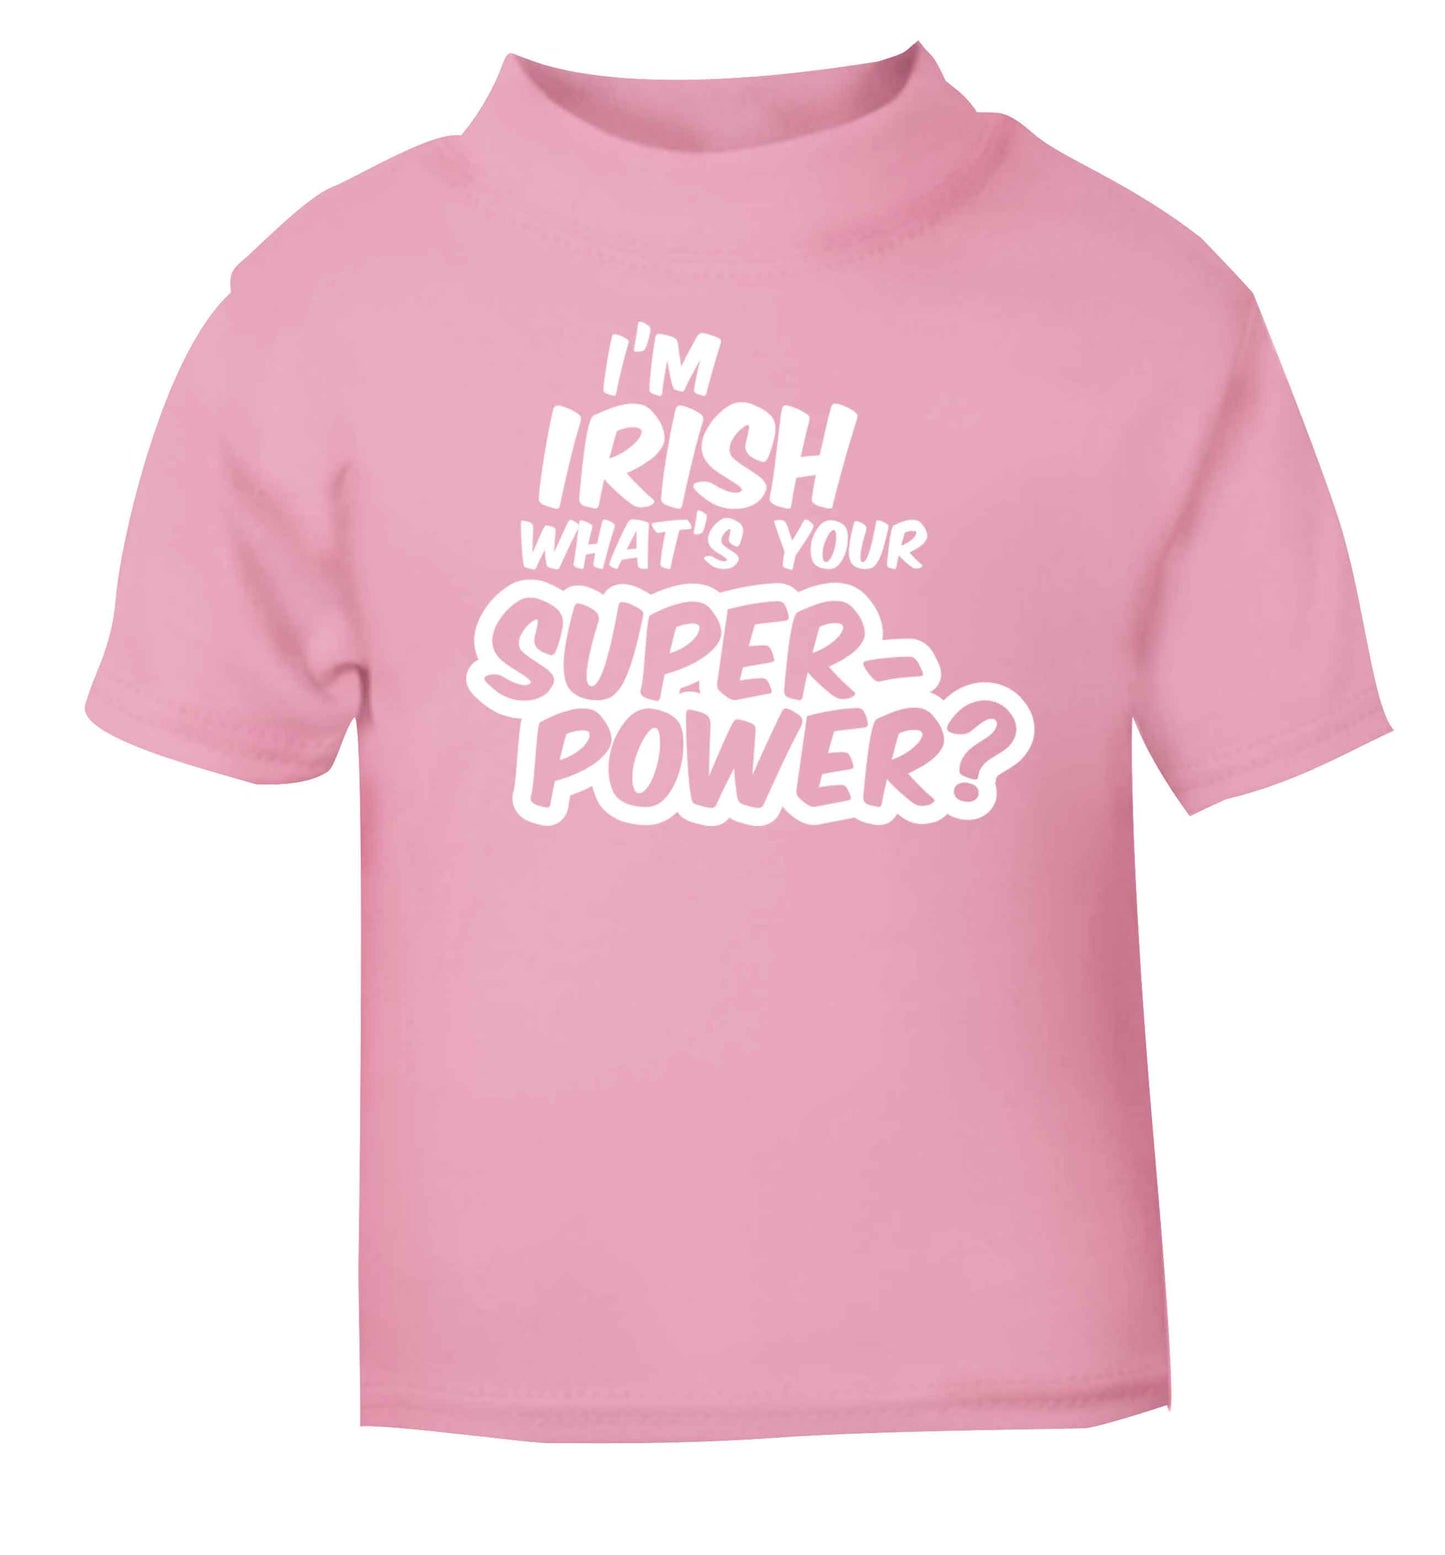 I'm Irish what's your superpower? light pink baby toddler Tshirt 2 Years